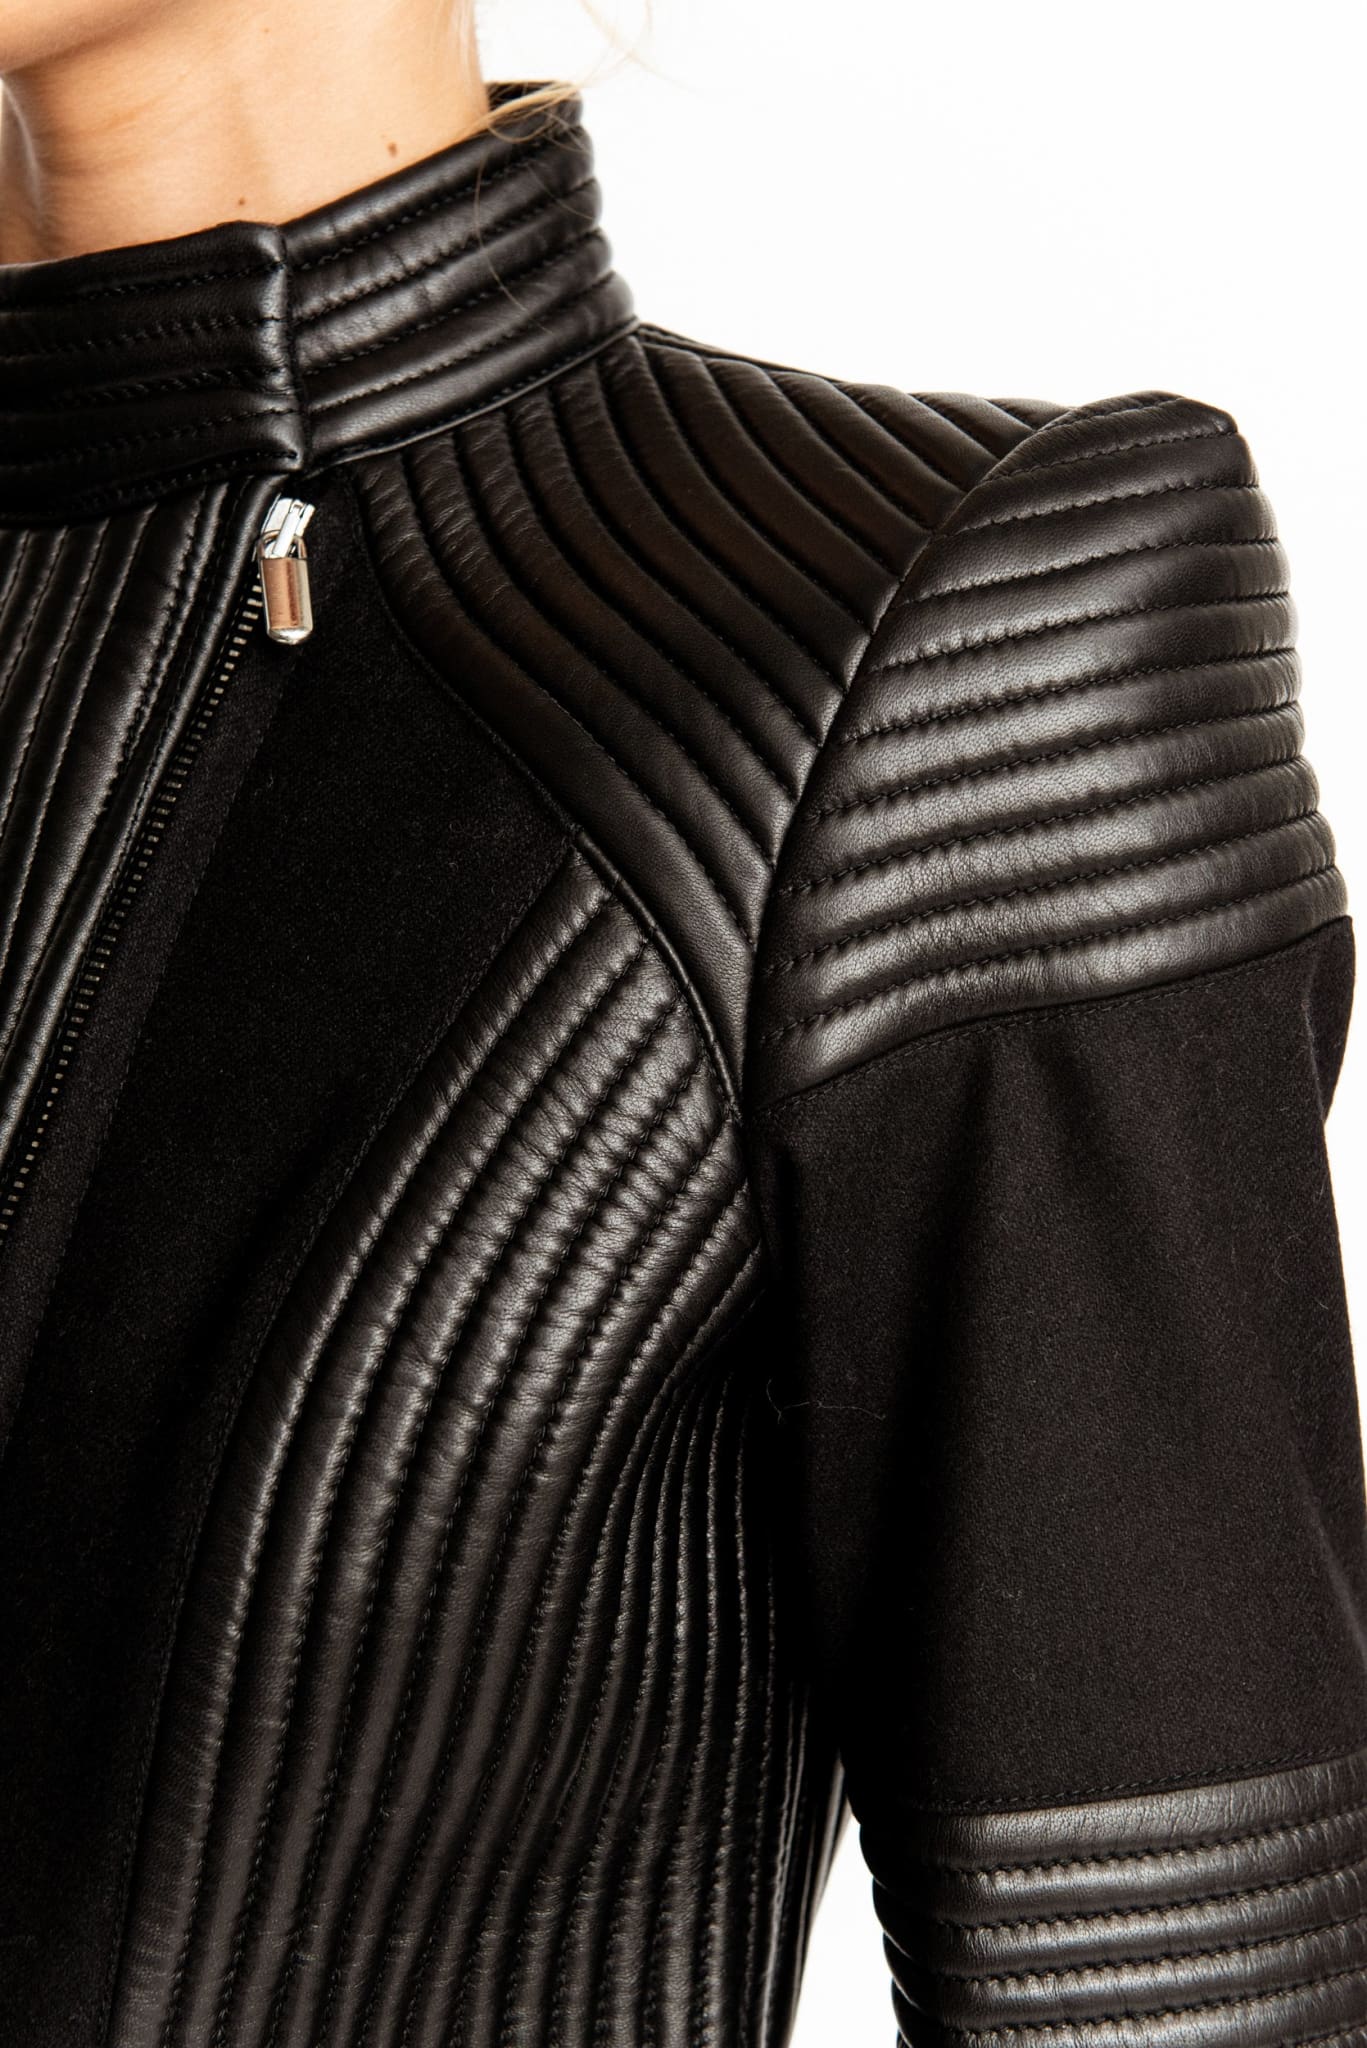 Moto Quilted Leather Sleeve Jacket - Jacket